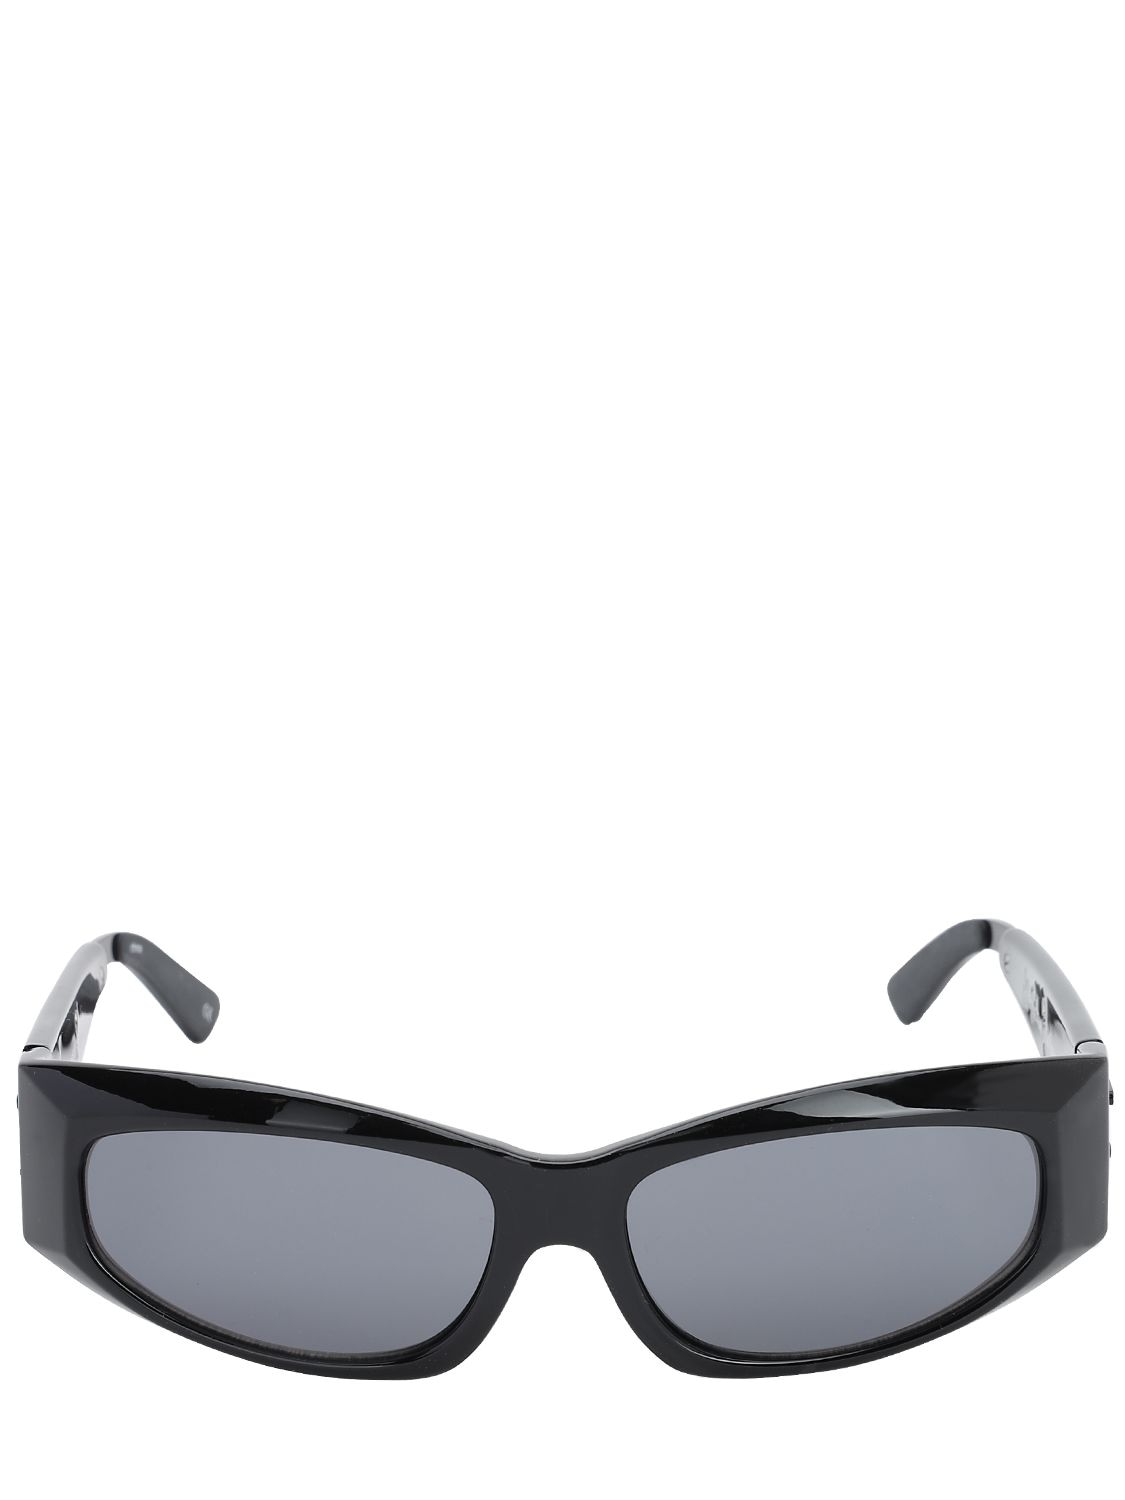 Le Specs Adam Selman The Edge Sunglasses In Black